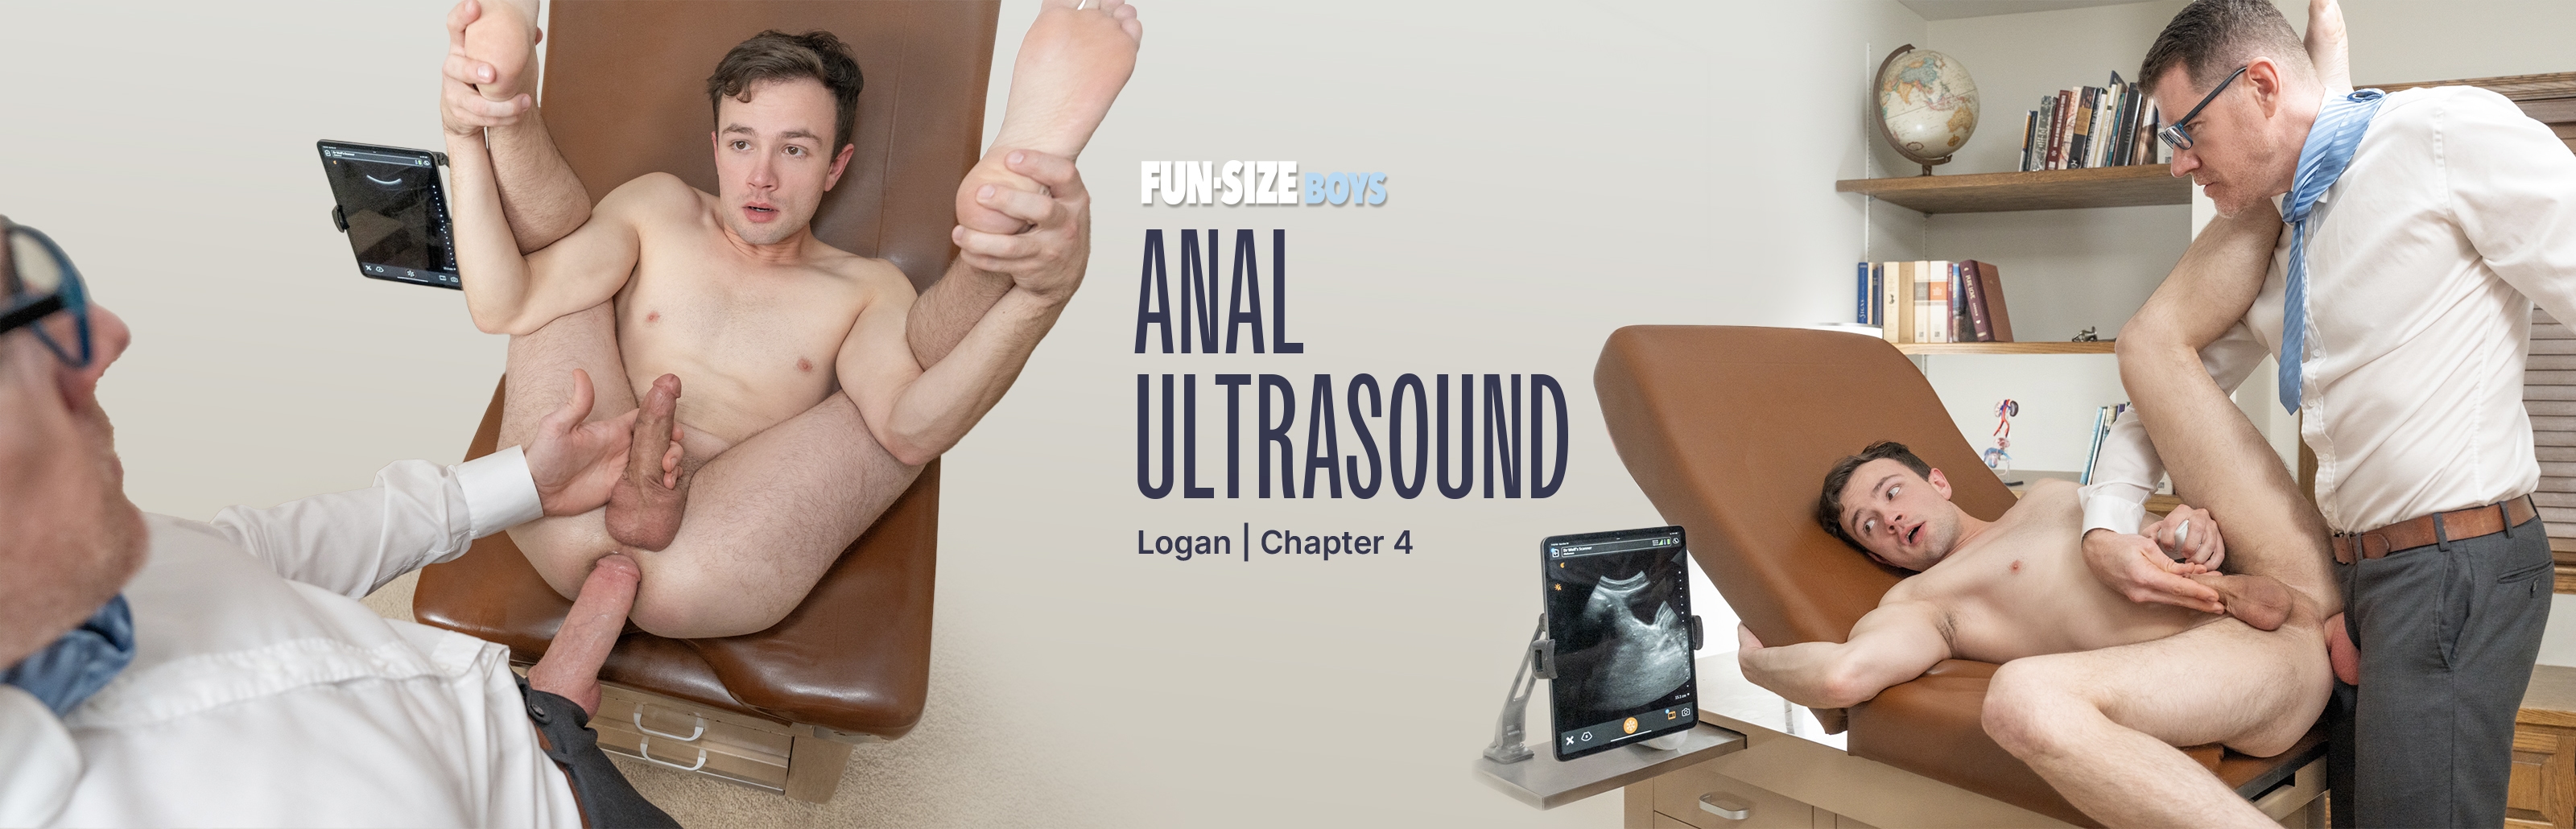 Anal Ultrasound | LOGAN | Chapter 9 Photos 97